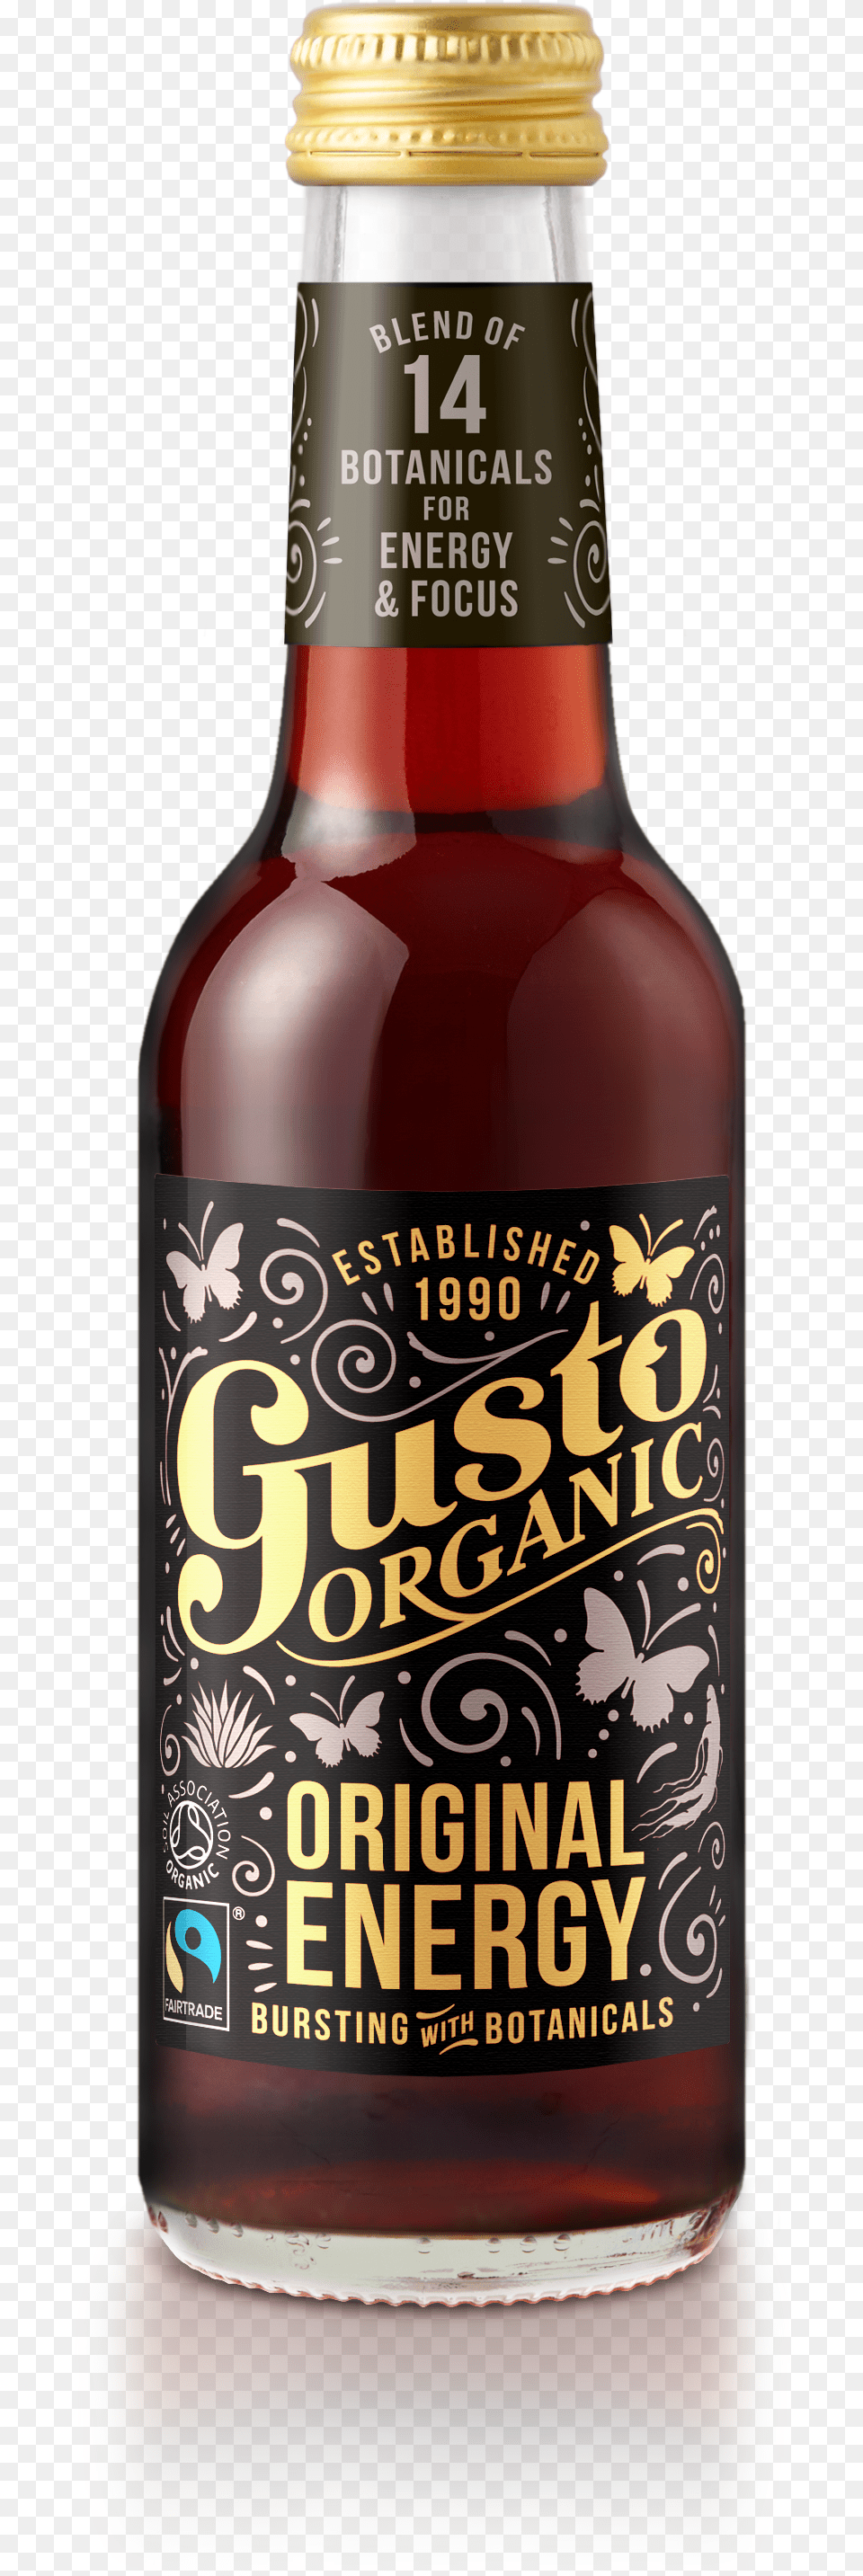 Gusto Organic Original Energy, Alcohol, Beer, Beer Bottle, Beverage Png